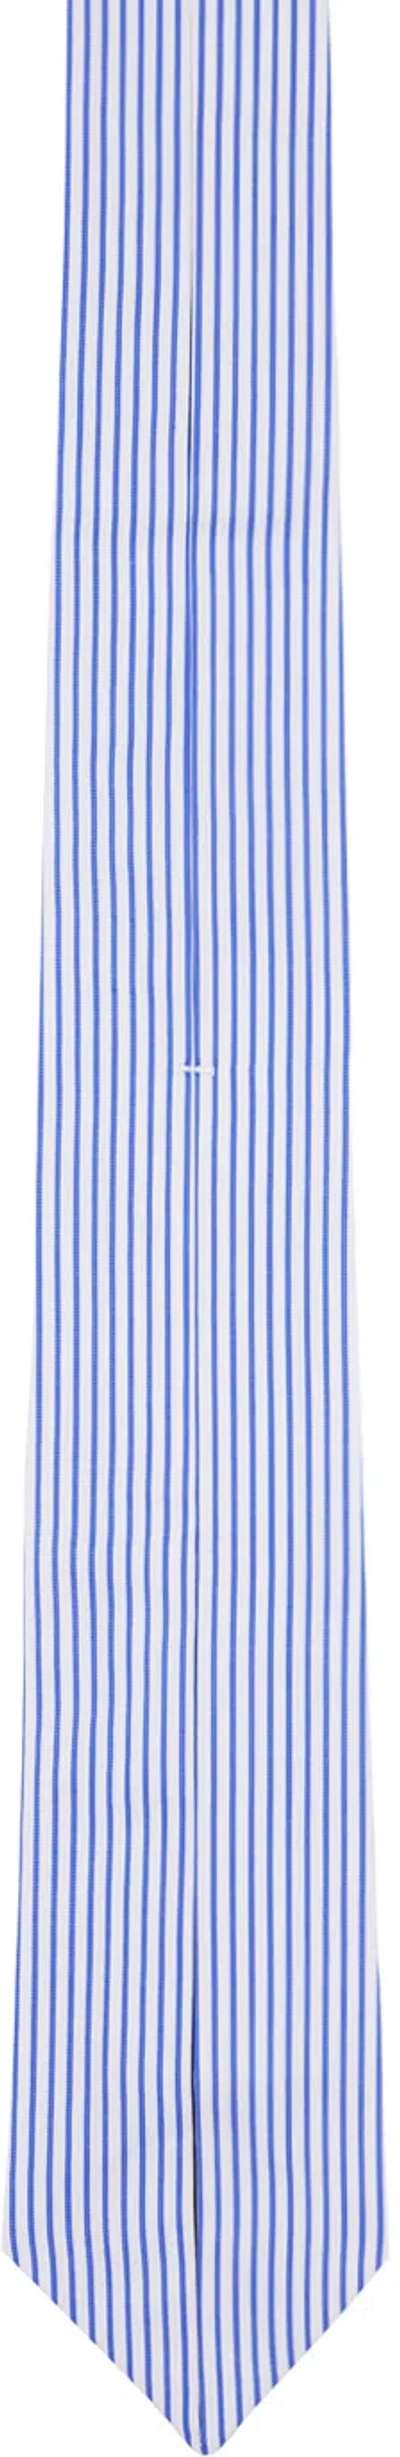 _j.l - A.l_ Blue & White Bellow Tie In White / Blue Stripe